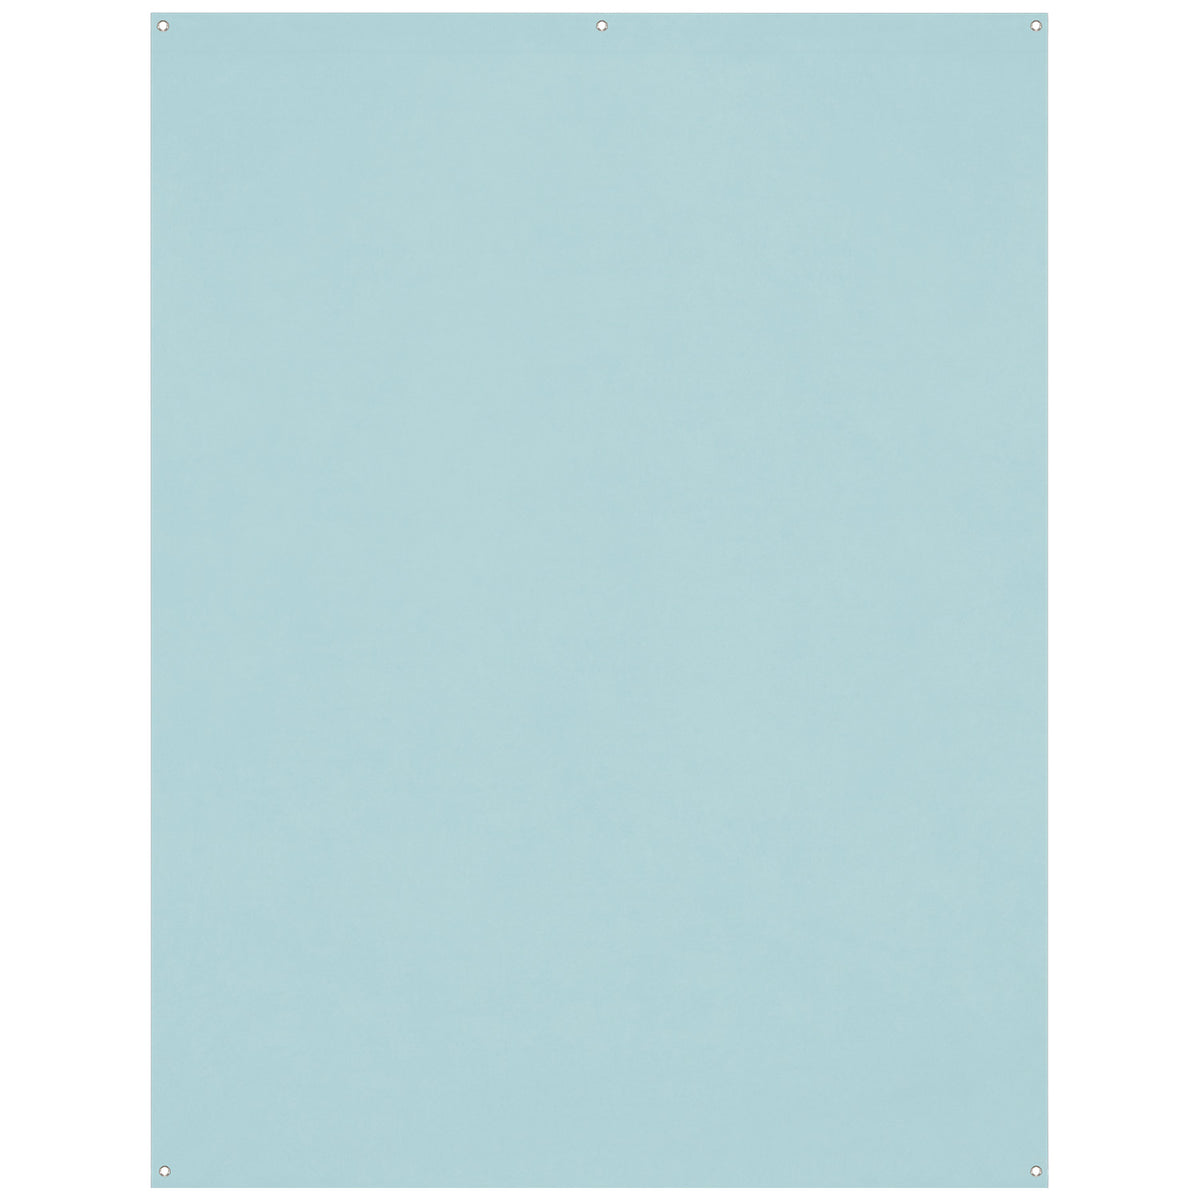 X-Drop Wrinkle-Resistant Backdrop - Pastel Blue (5' x 7')